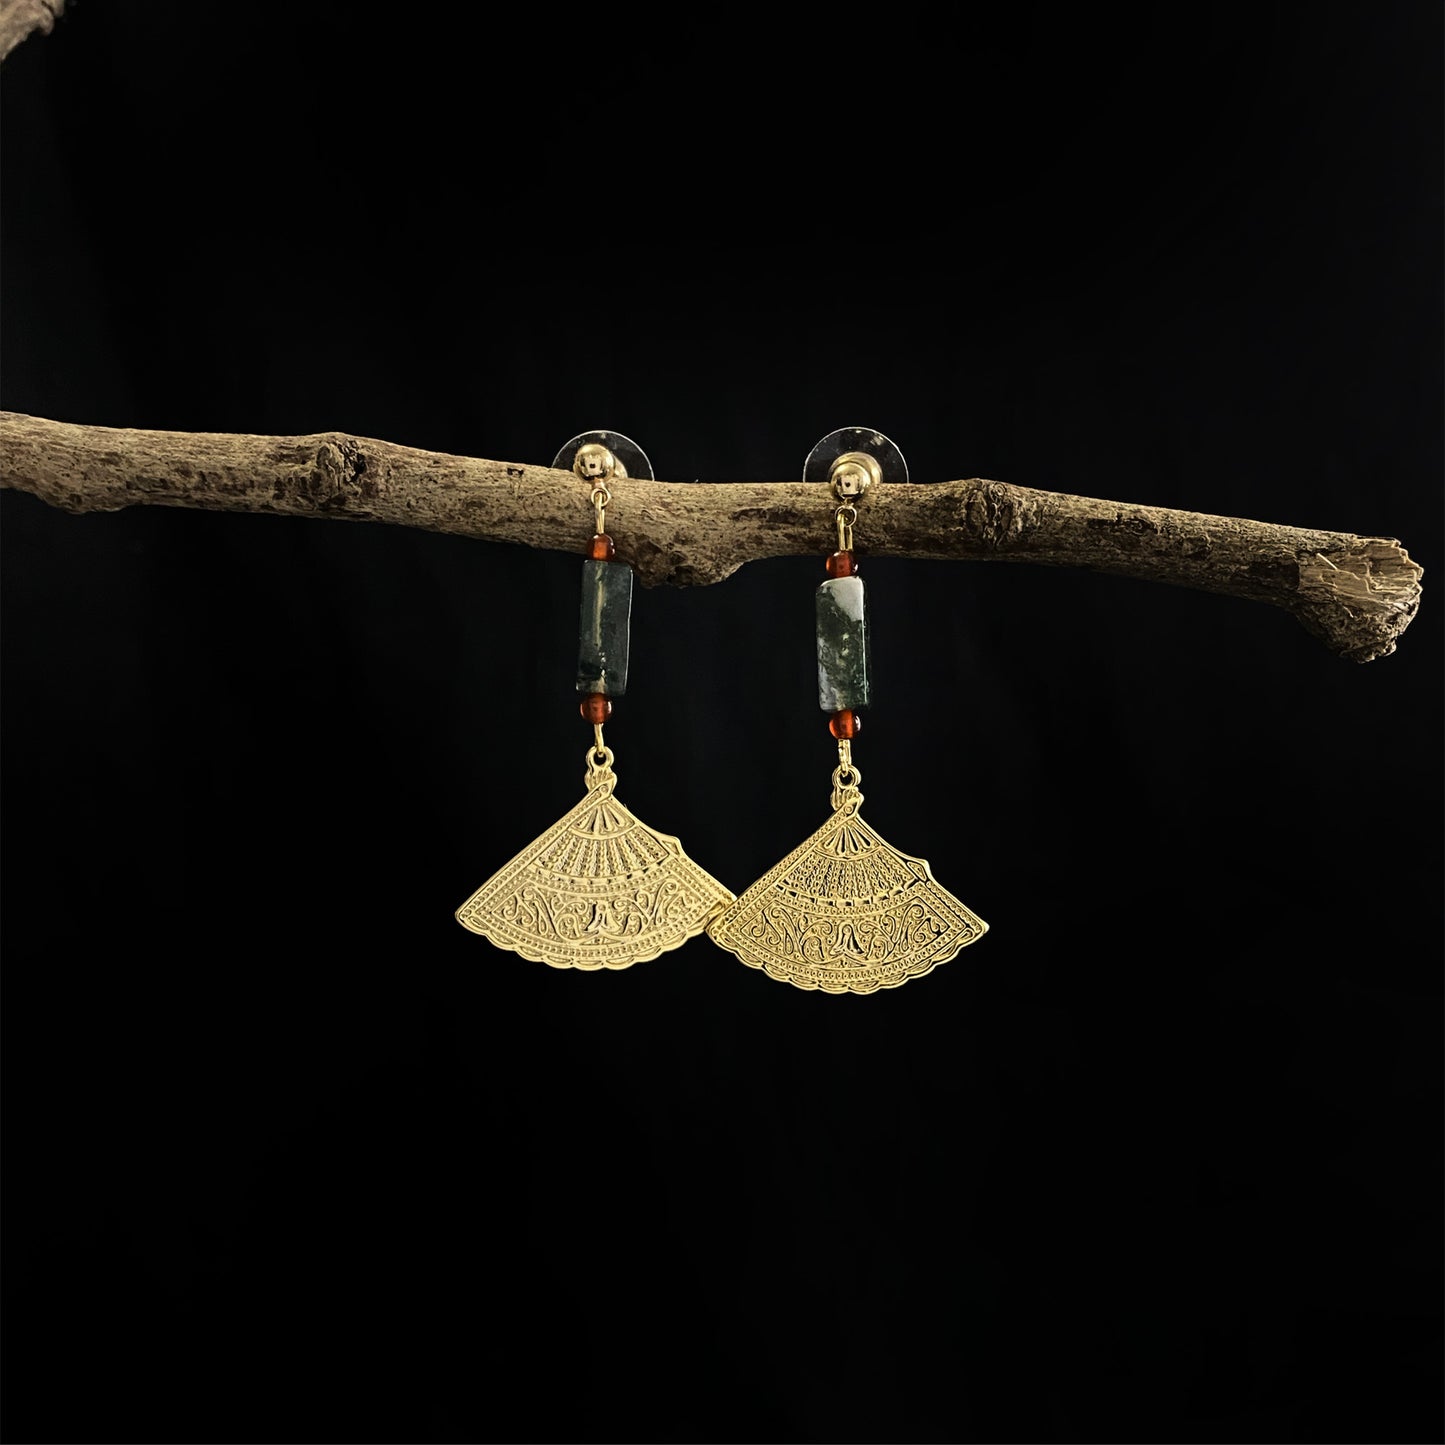 Oriental Fan Motif Earrings With Chalcedony Crystal - 14K Real Gold Plated Jewelry